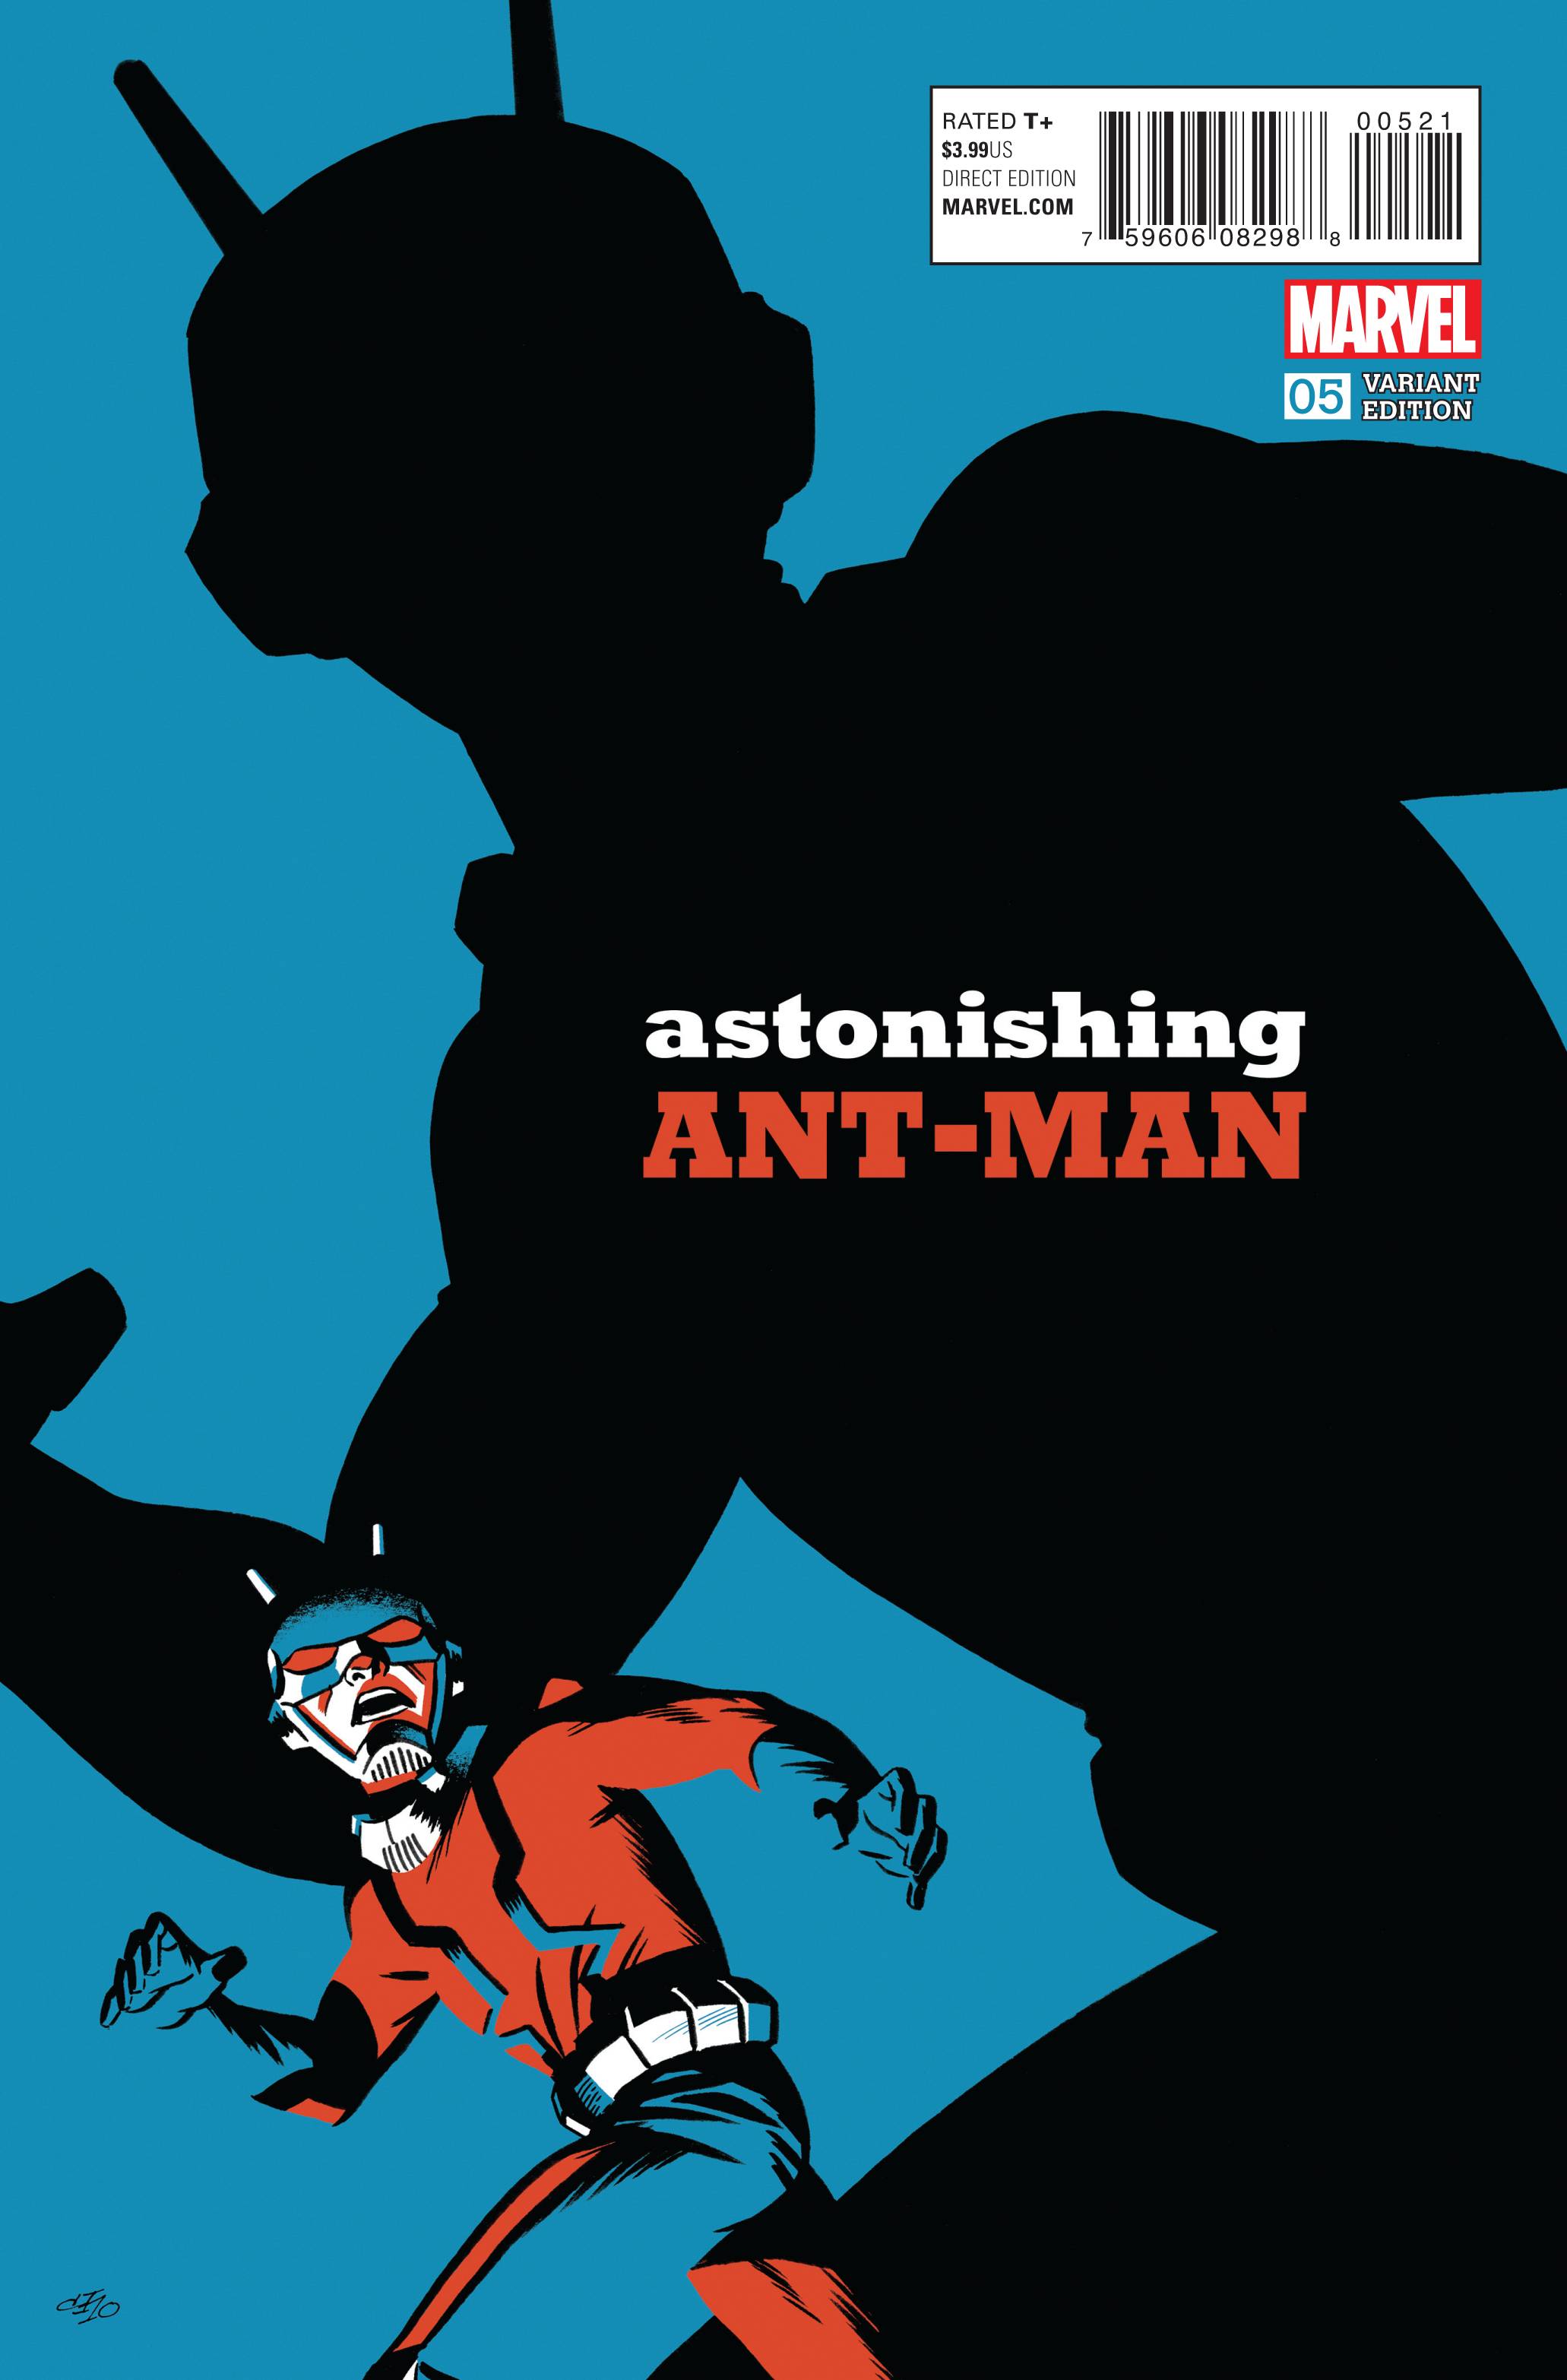 Astonishing Ant-Man #5 1 for 20 Variant Michael Cho